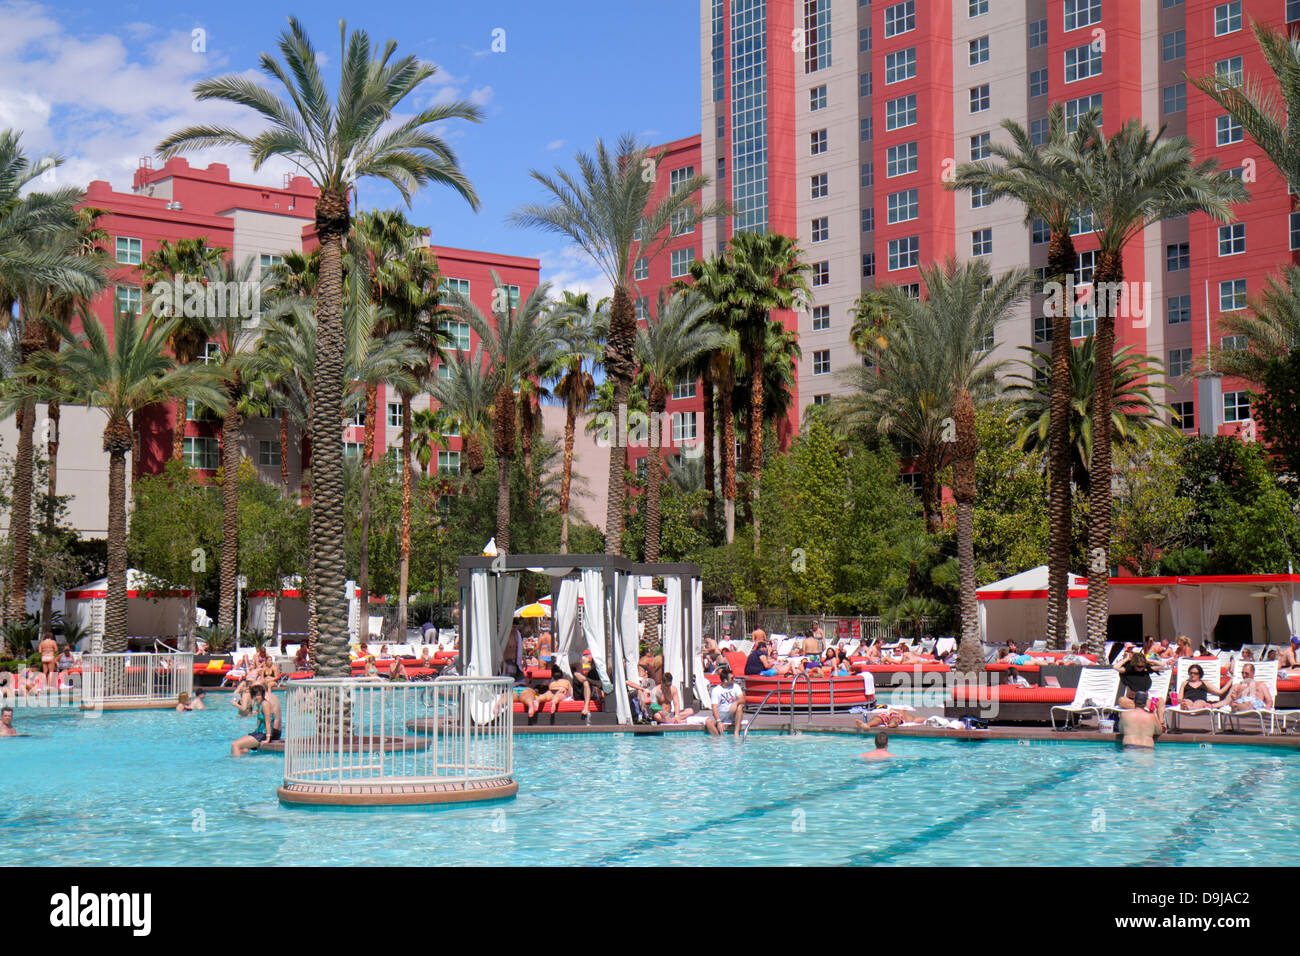 Las Vegas Nevada,The Strip,South Las Vegas Boulevard,Flamingo Las Vegas Hotel & Casino,swimming pool area,sunbathers,guests,NV130401026 Stock Photo